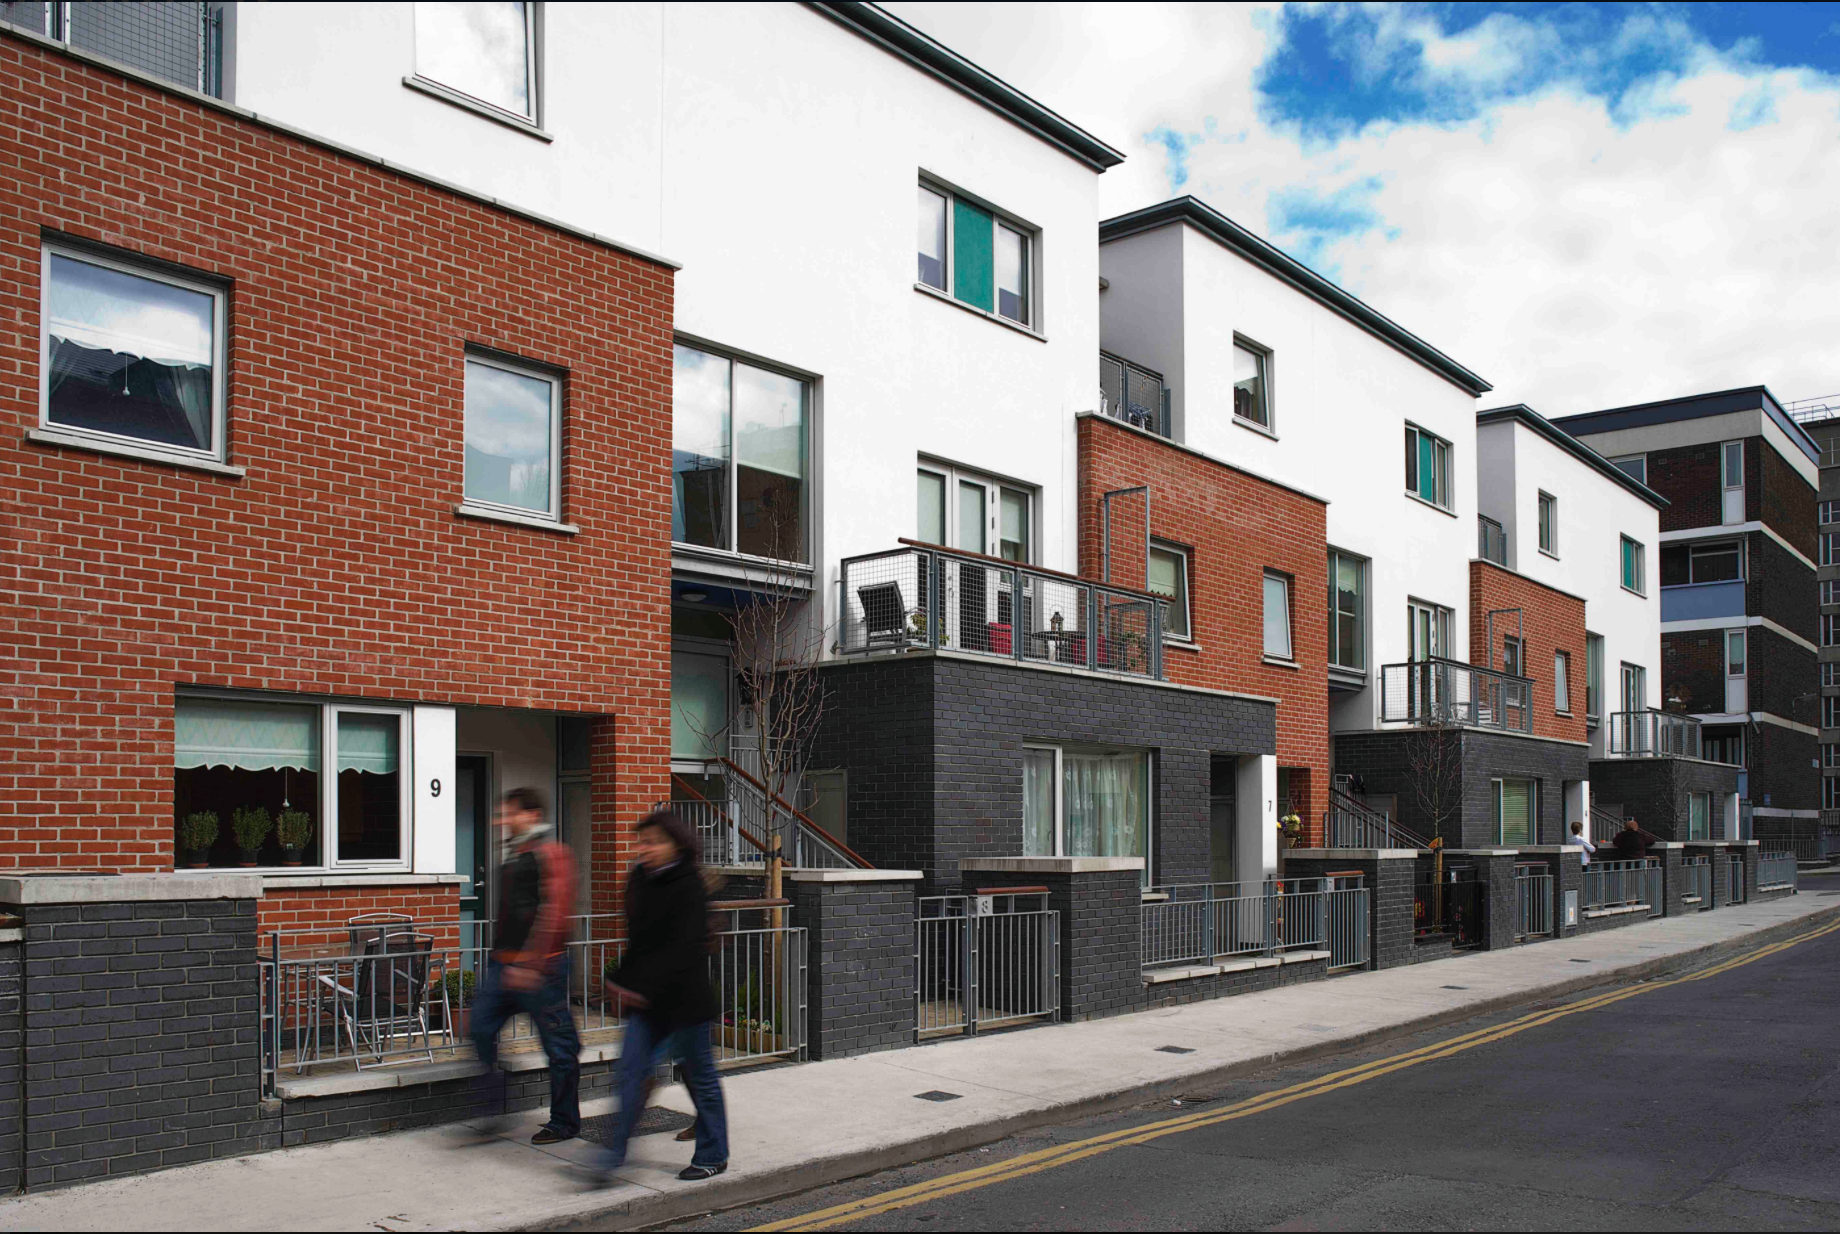 Eco_Housing_Development_Dublin.png